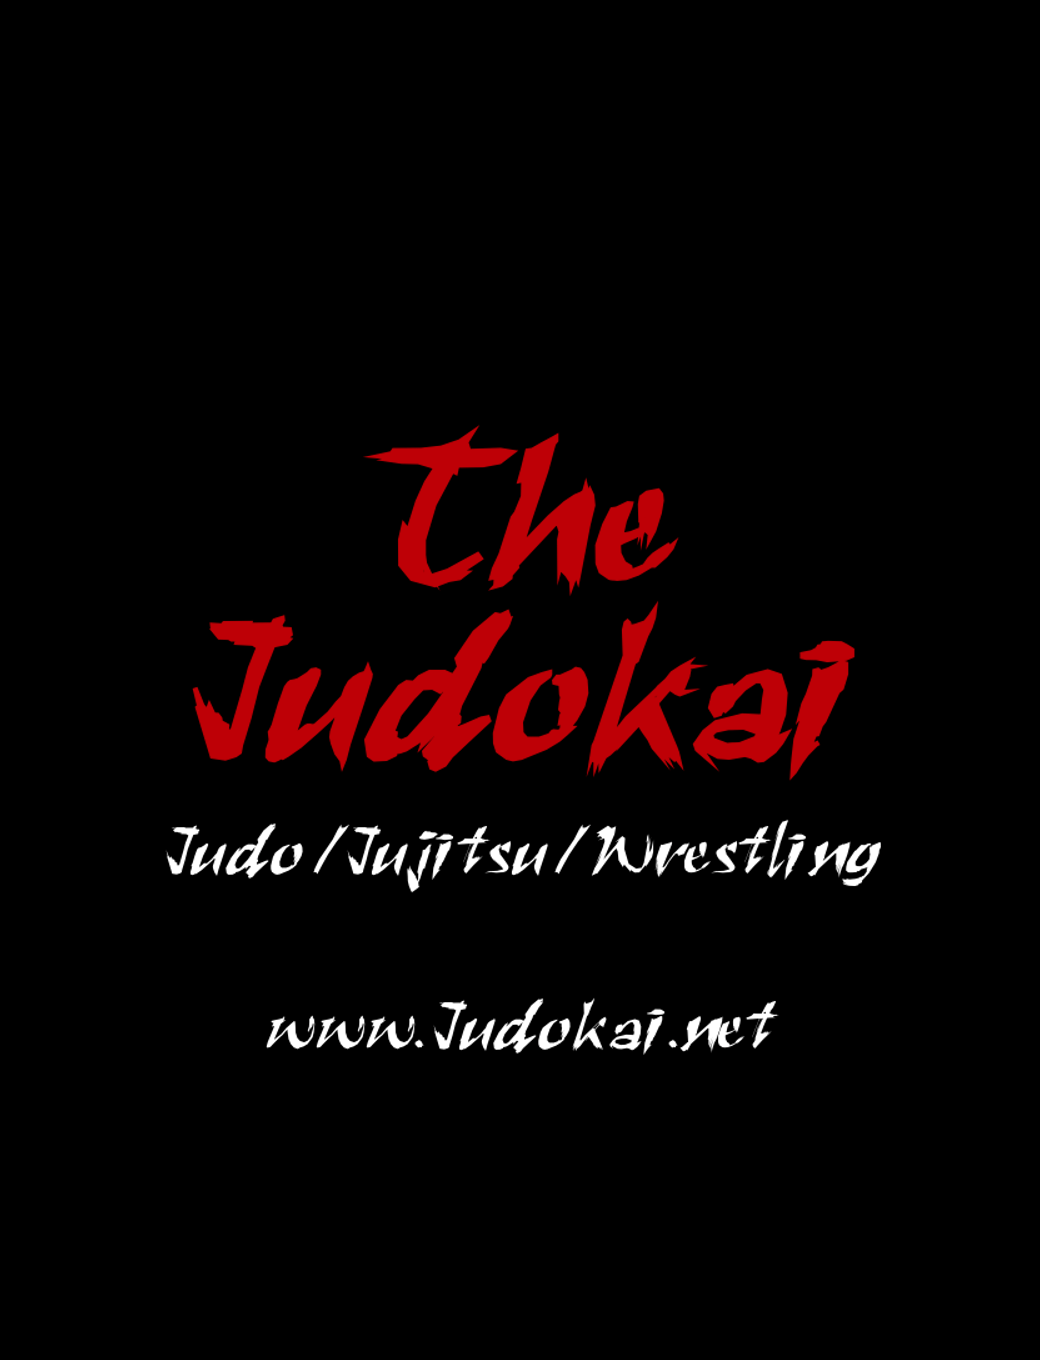 The Judokai Freestyle Judo Jujitsu Wrestling Way It